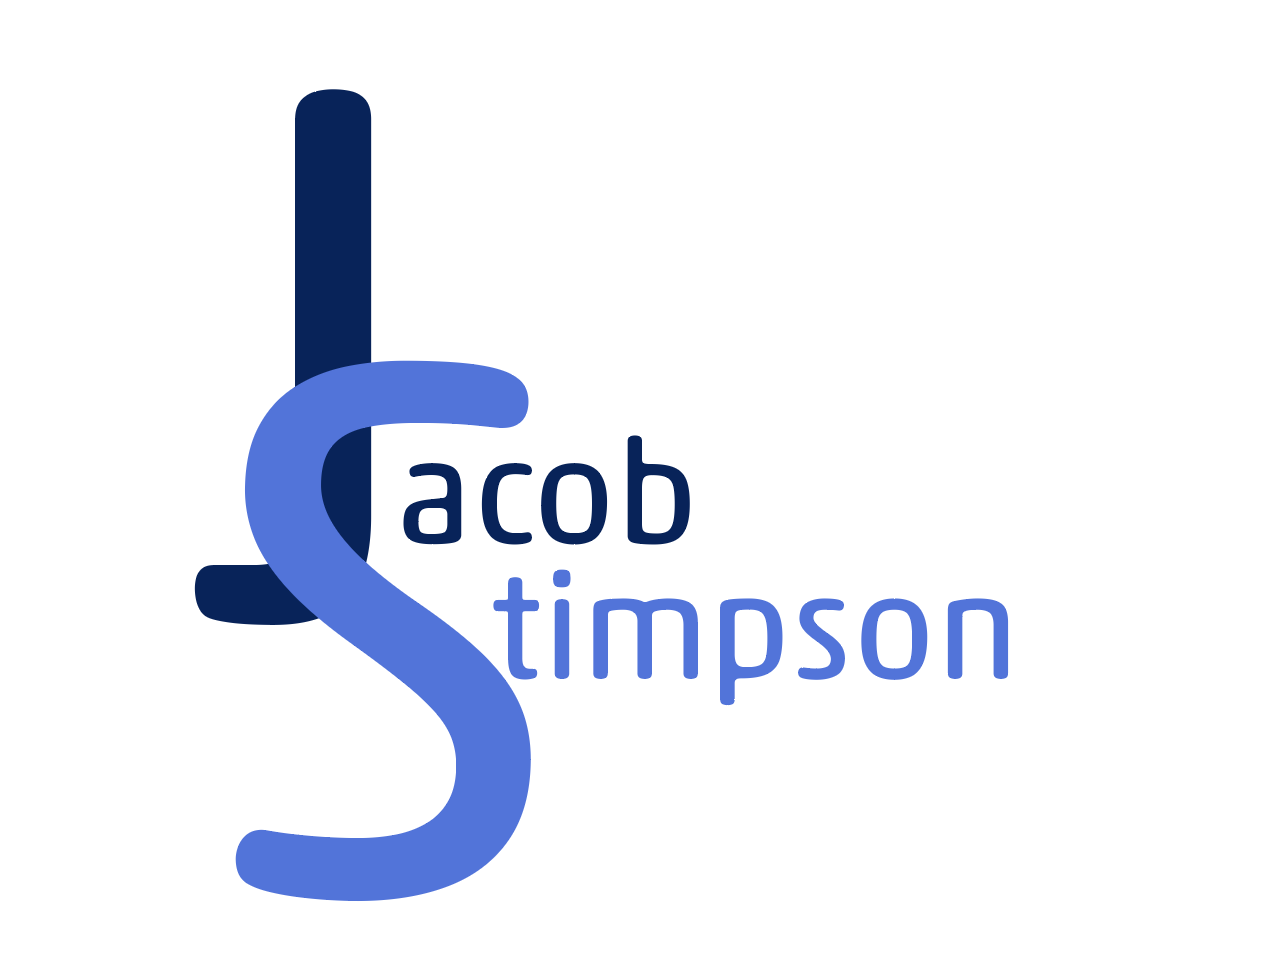 Jacob Stimpson